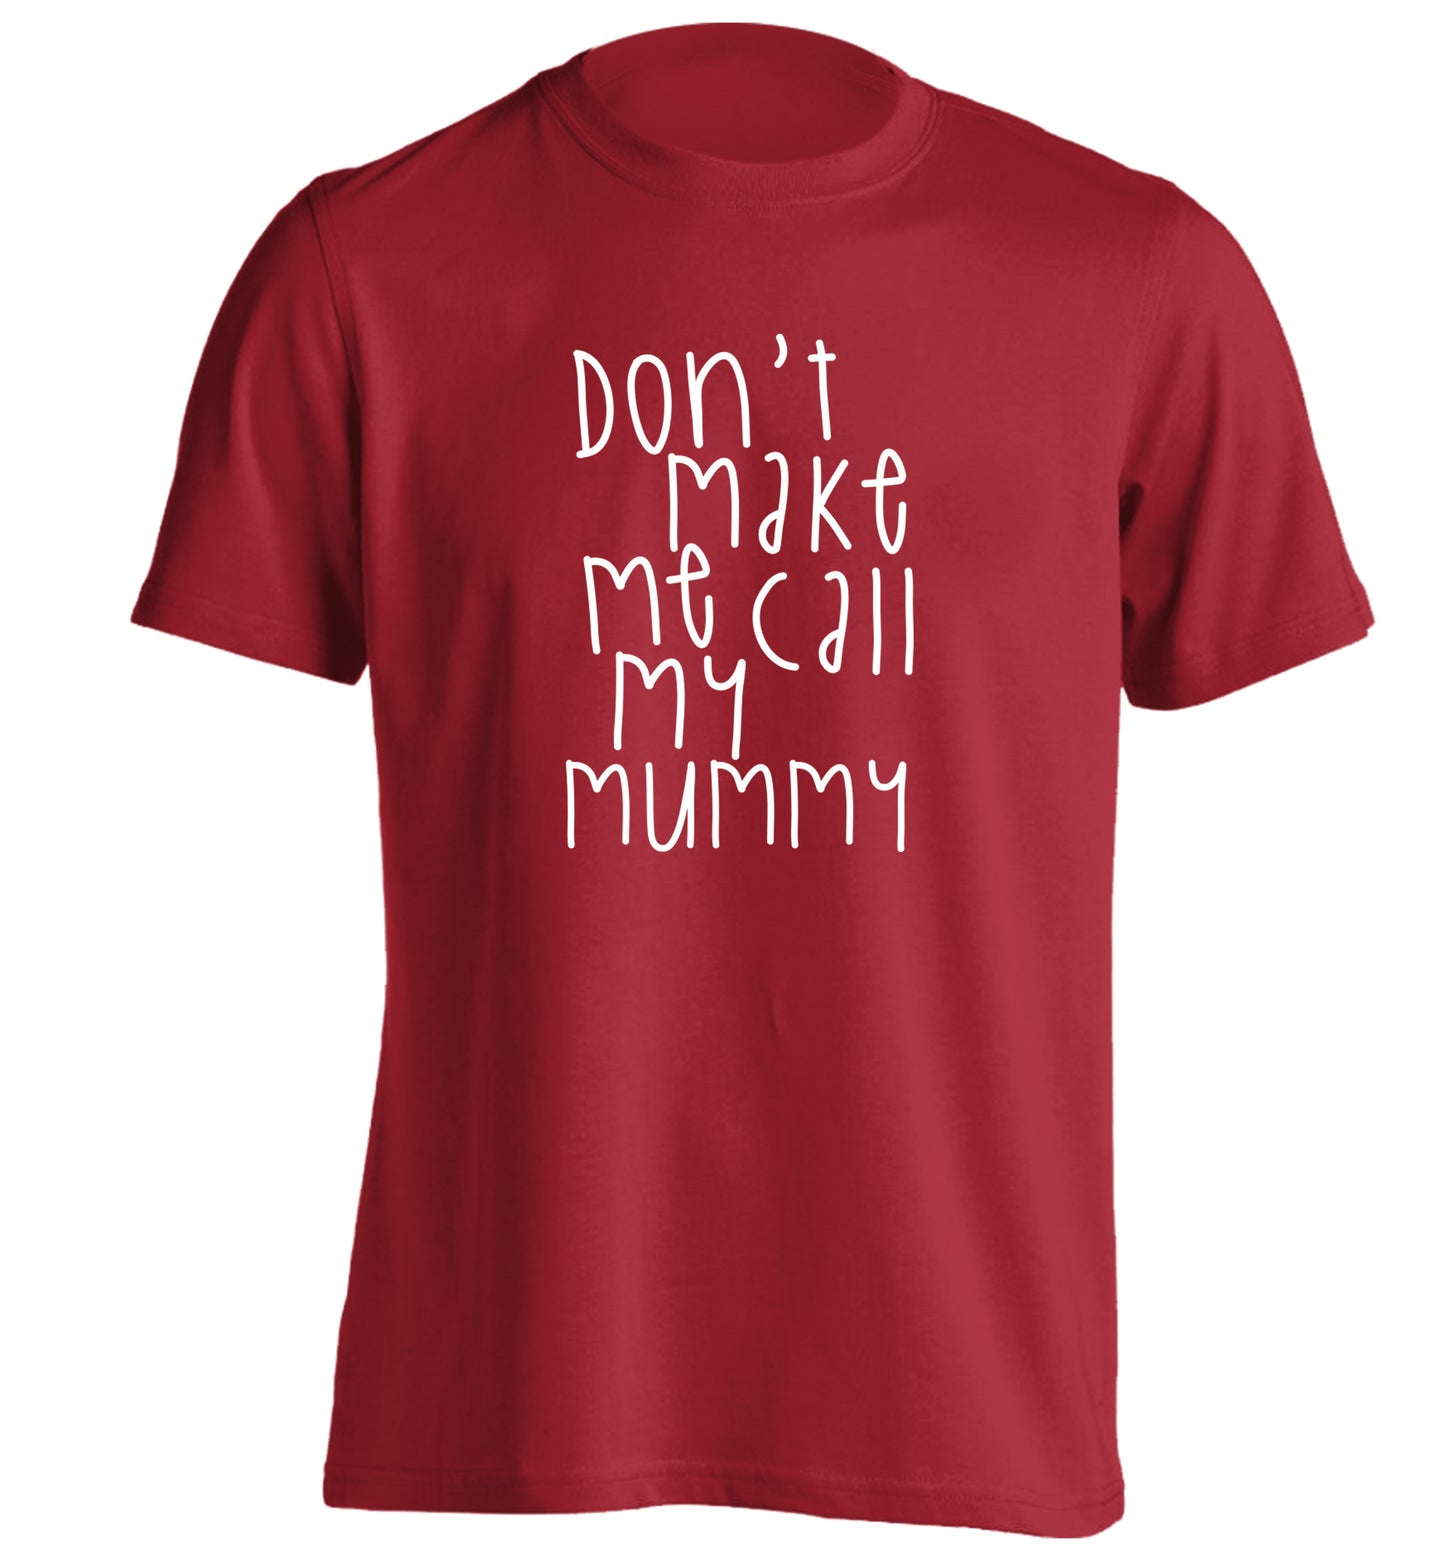 Don't make me call my mummy adults unisex red Tshirt 2XL